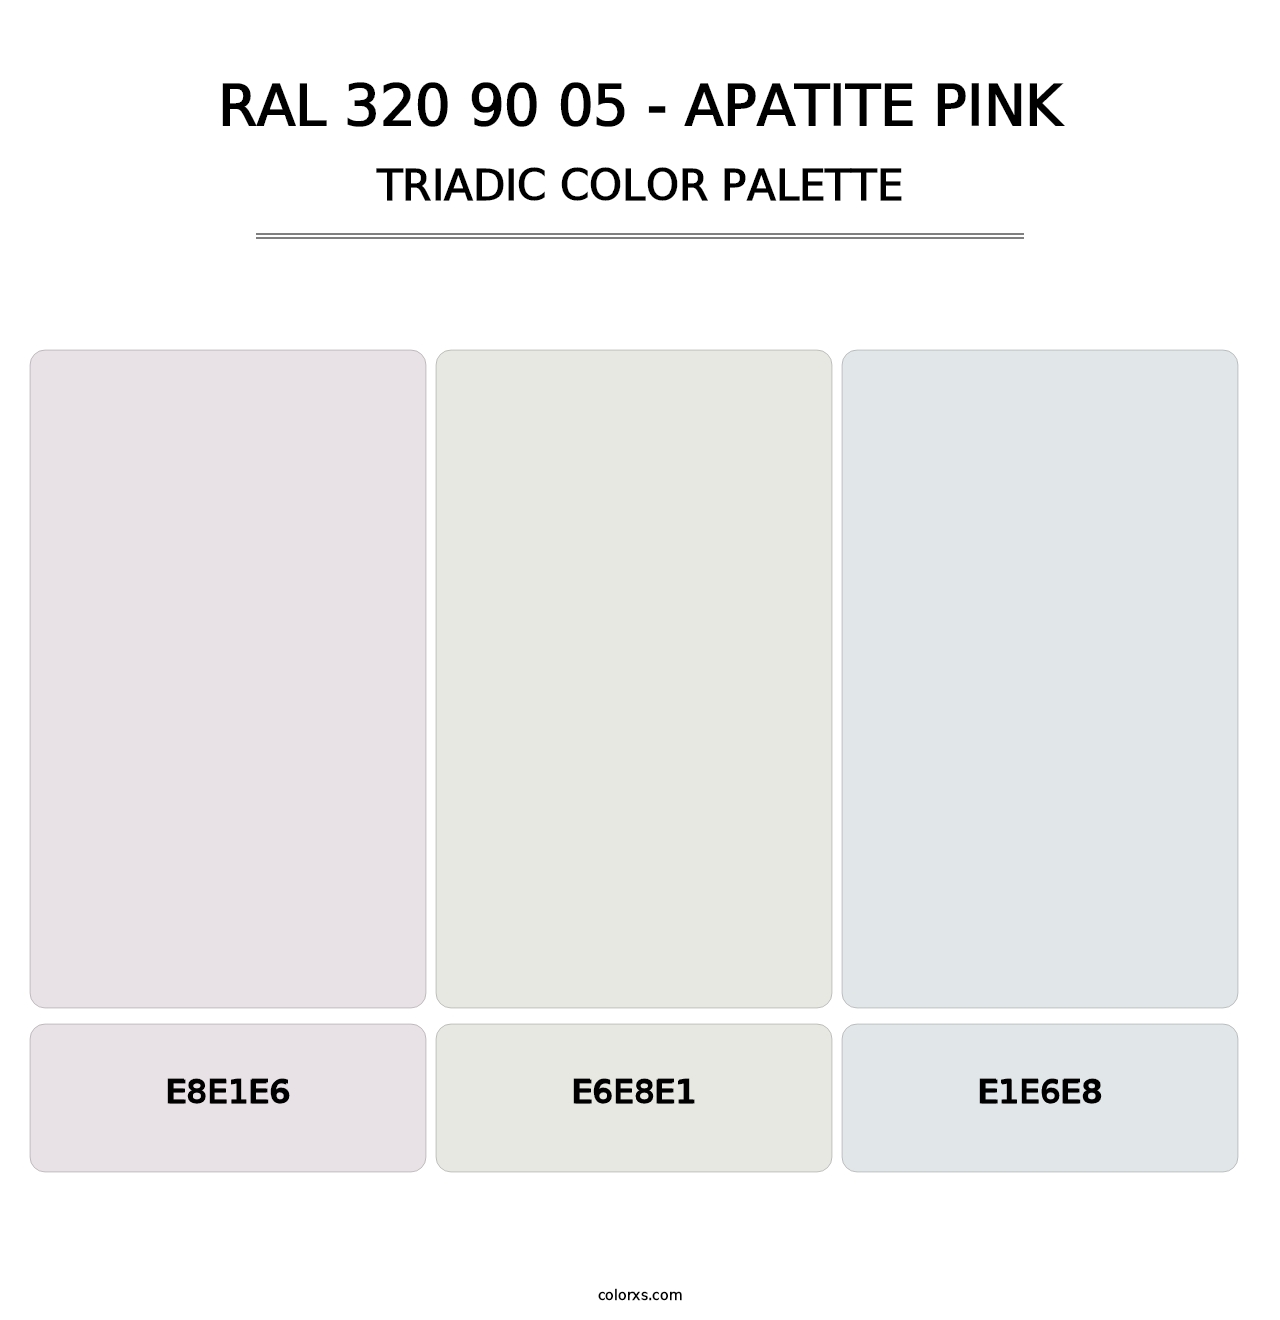 RAL 320 90 05 - Apatite Pink - Triadic Color Palette